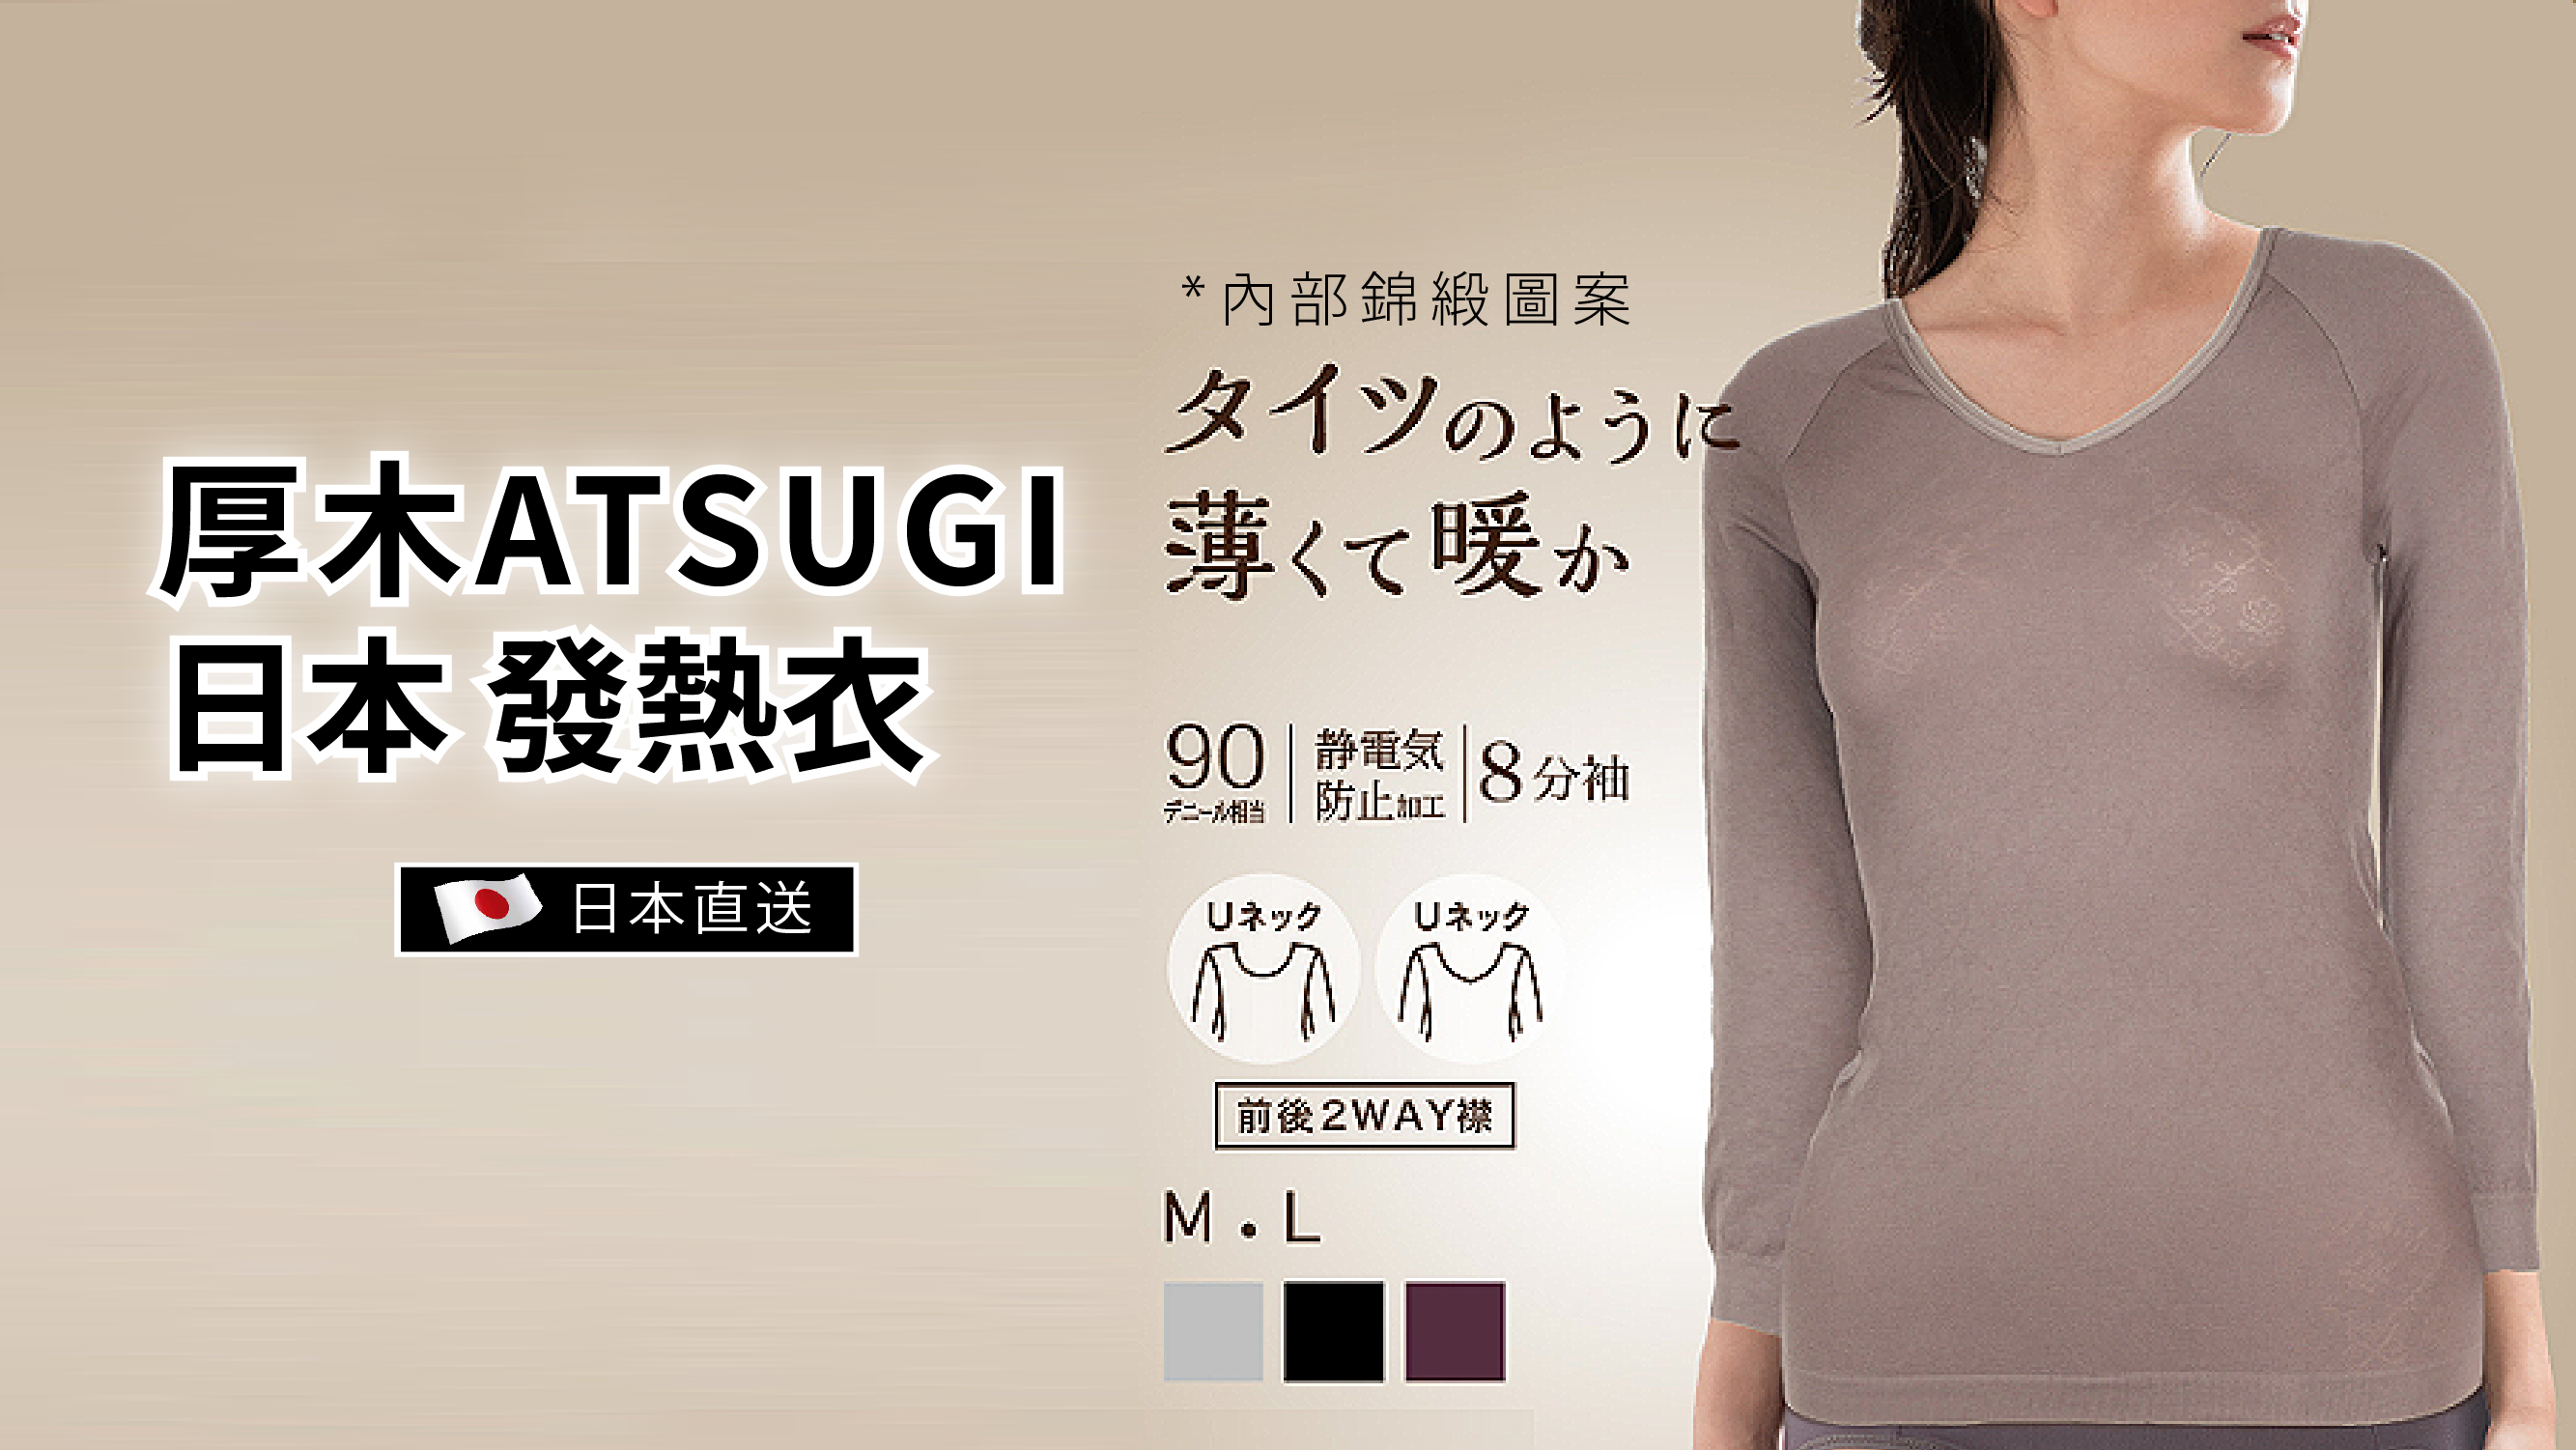 Atsugi ATSUGI Japan women's U-neck two-sided wear brocade pattern